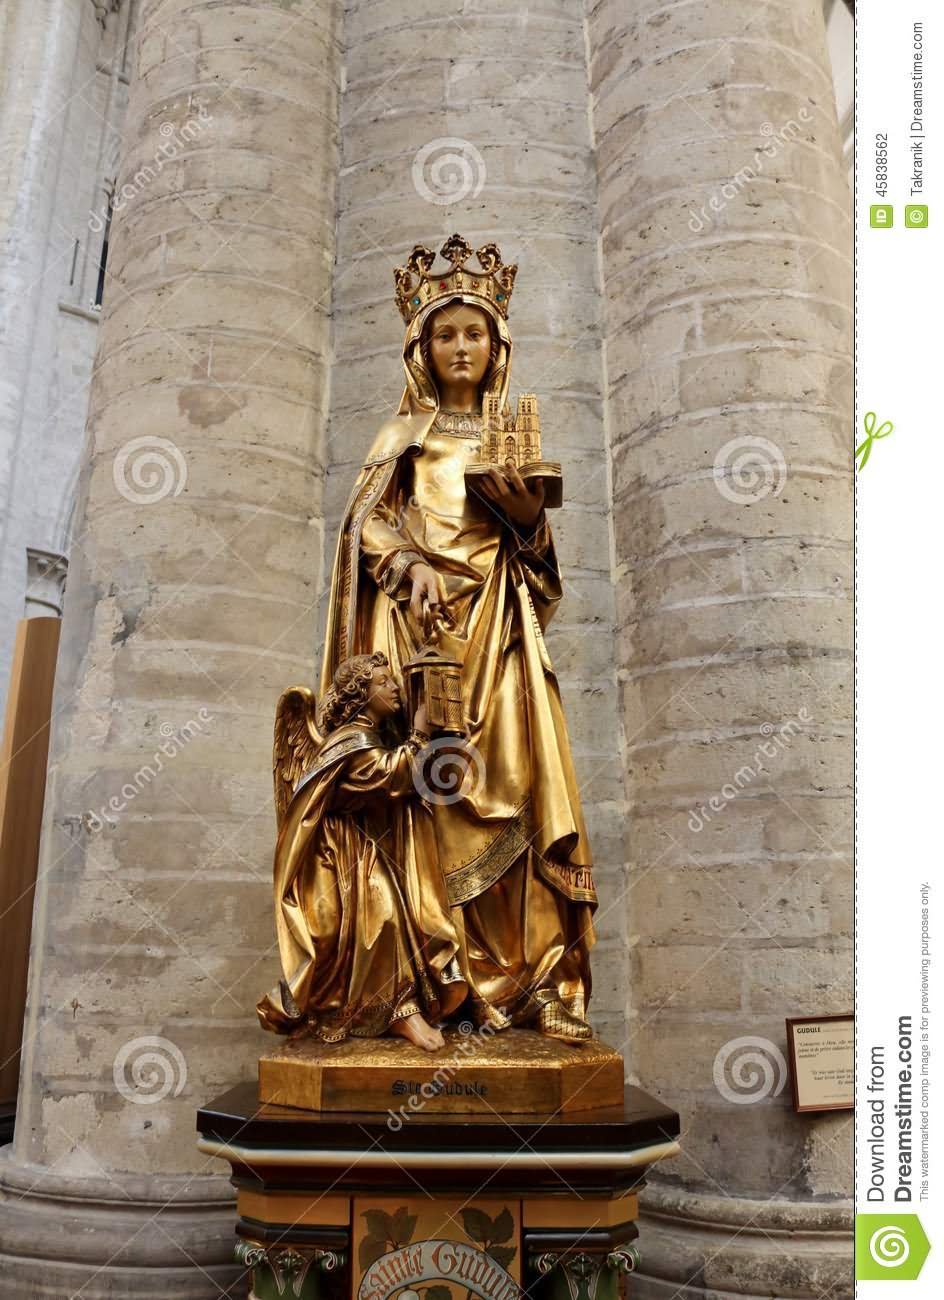 Saint Gadula Statue Inside The Cathedral of St. Michael and St. Gudula